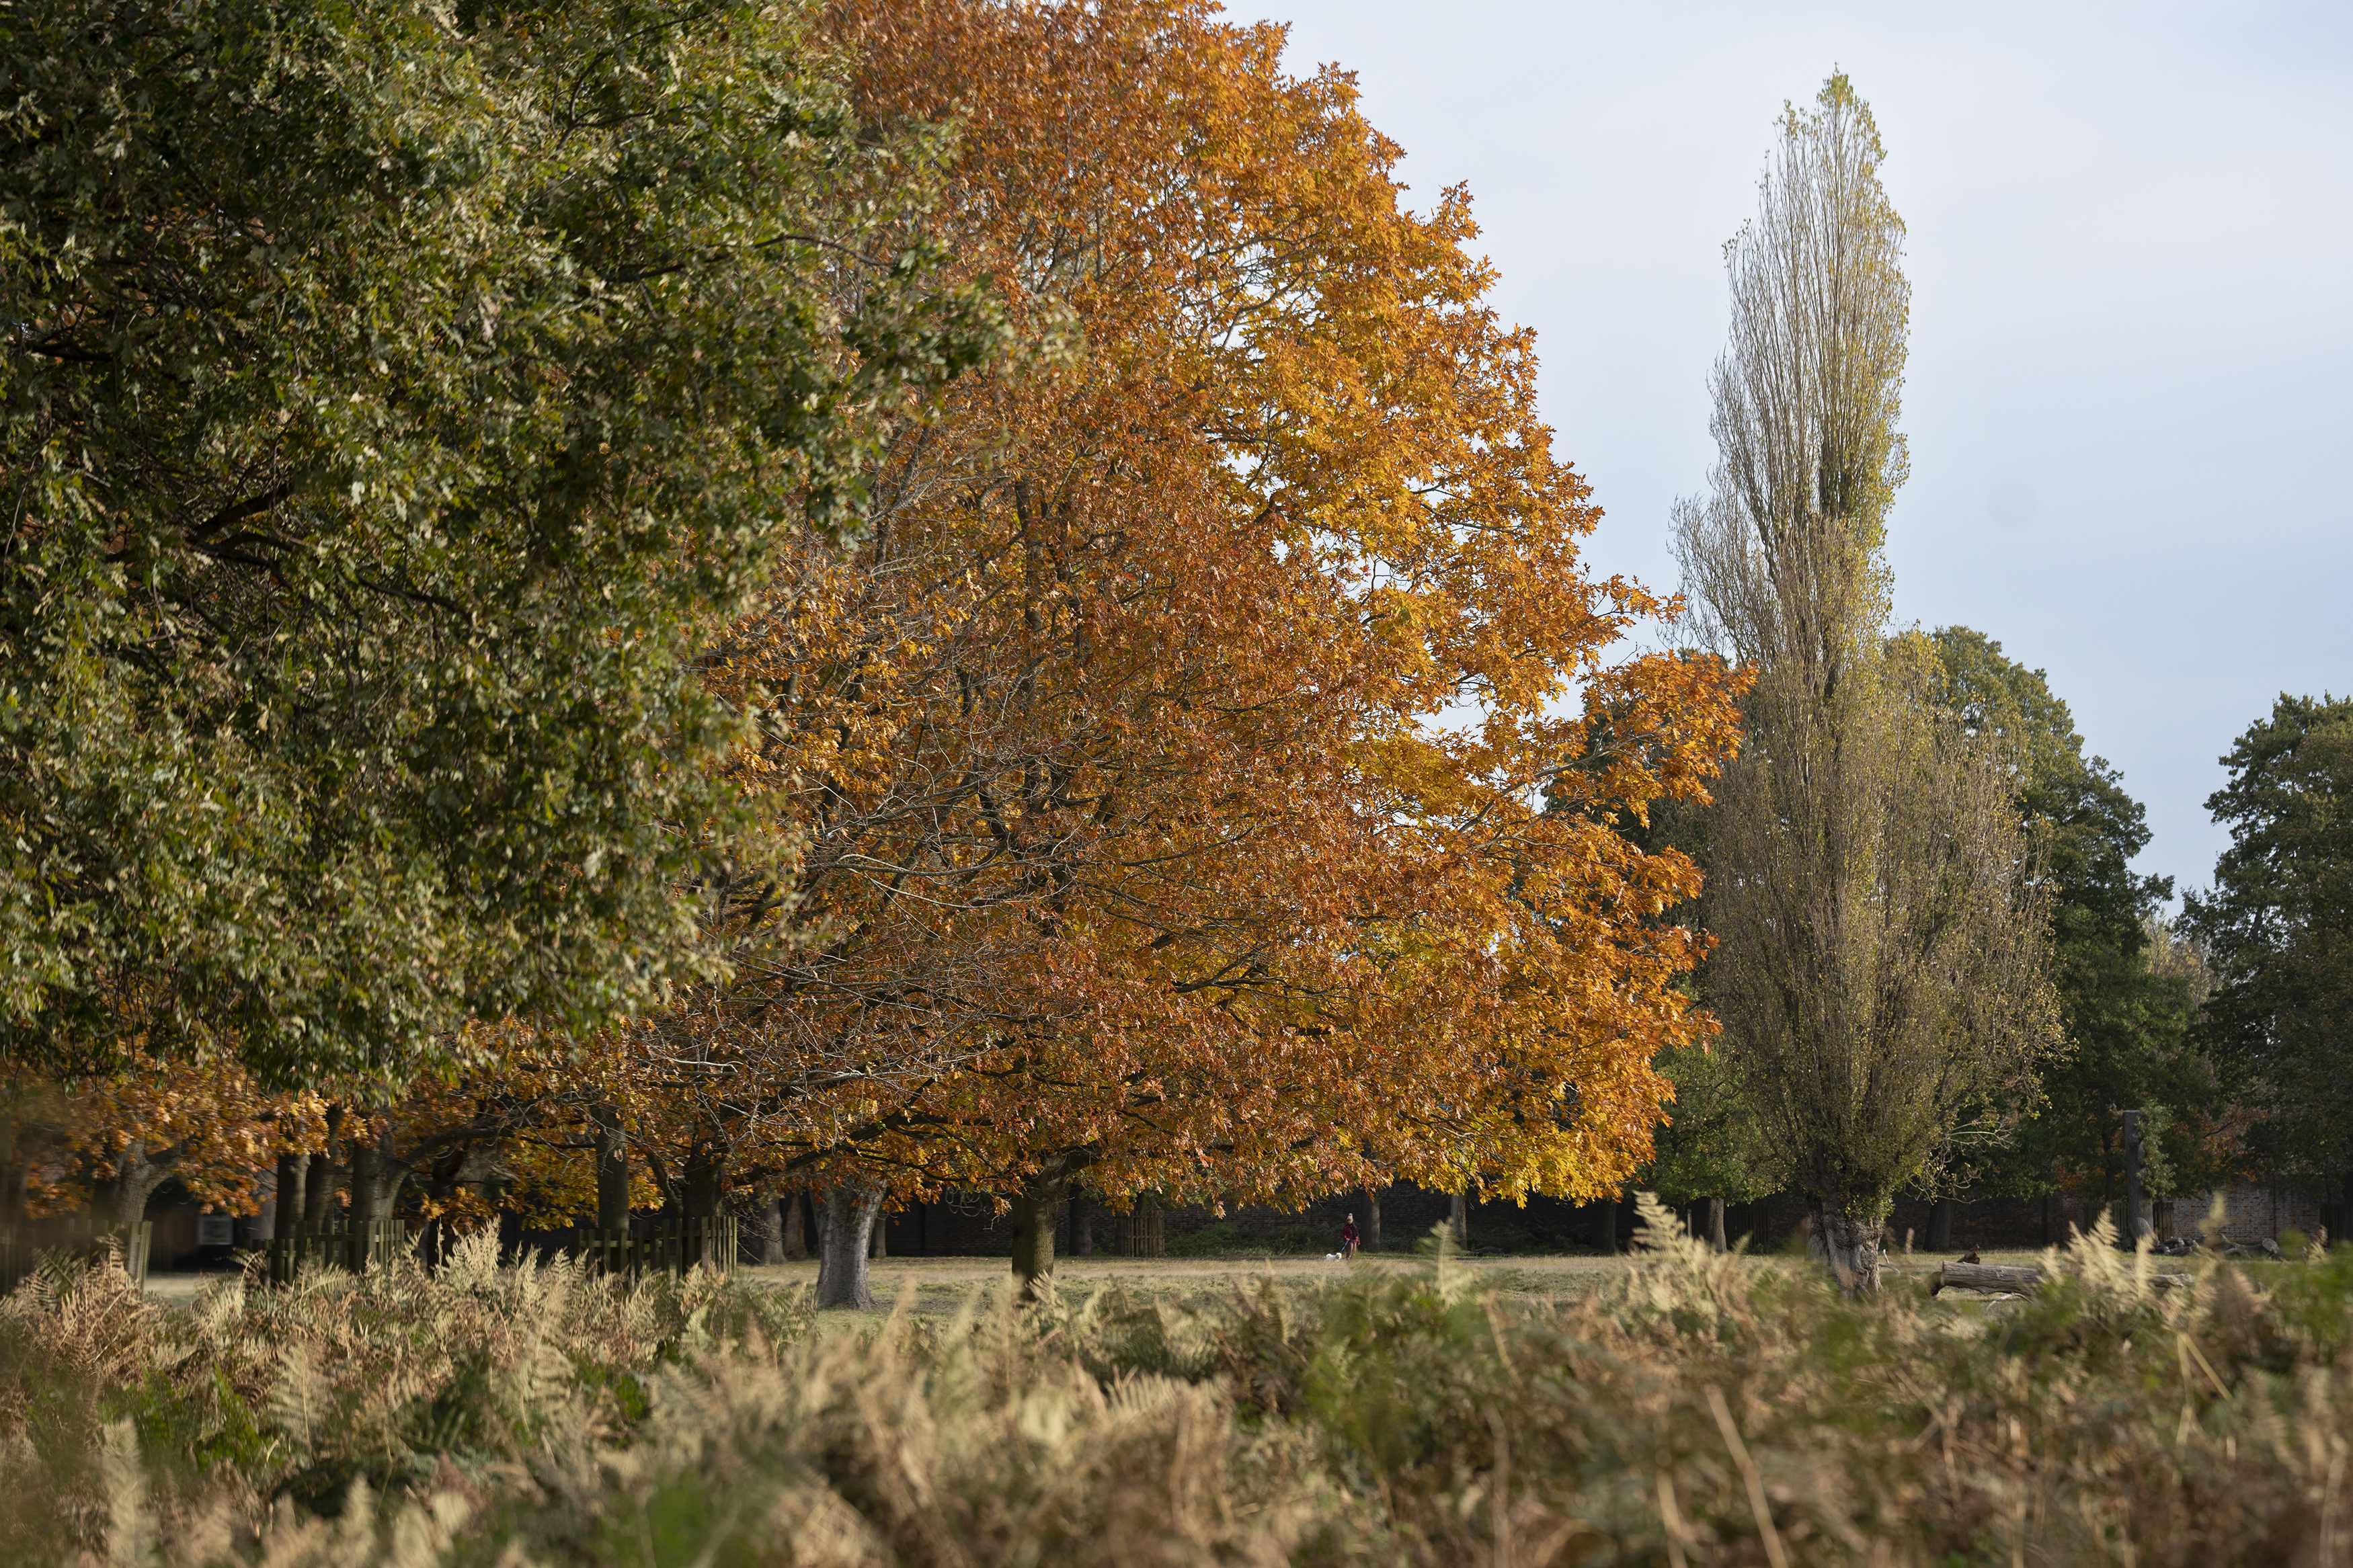 Autumnal trees is London's Bushy Park